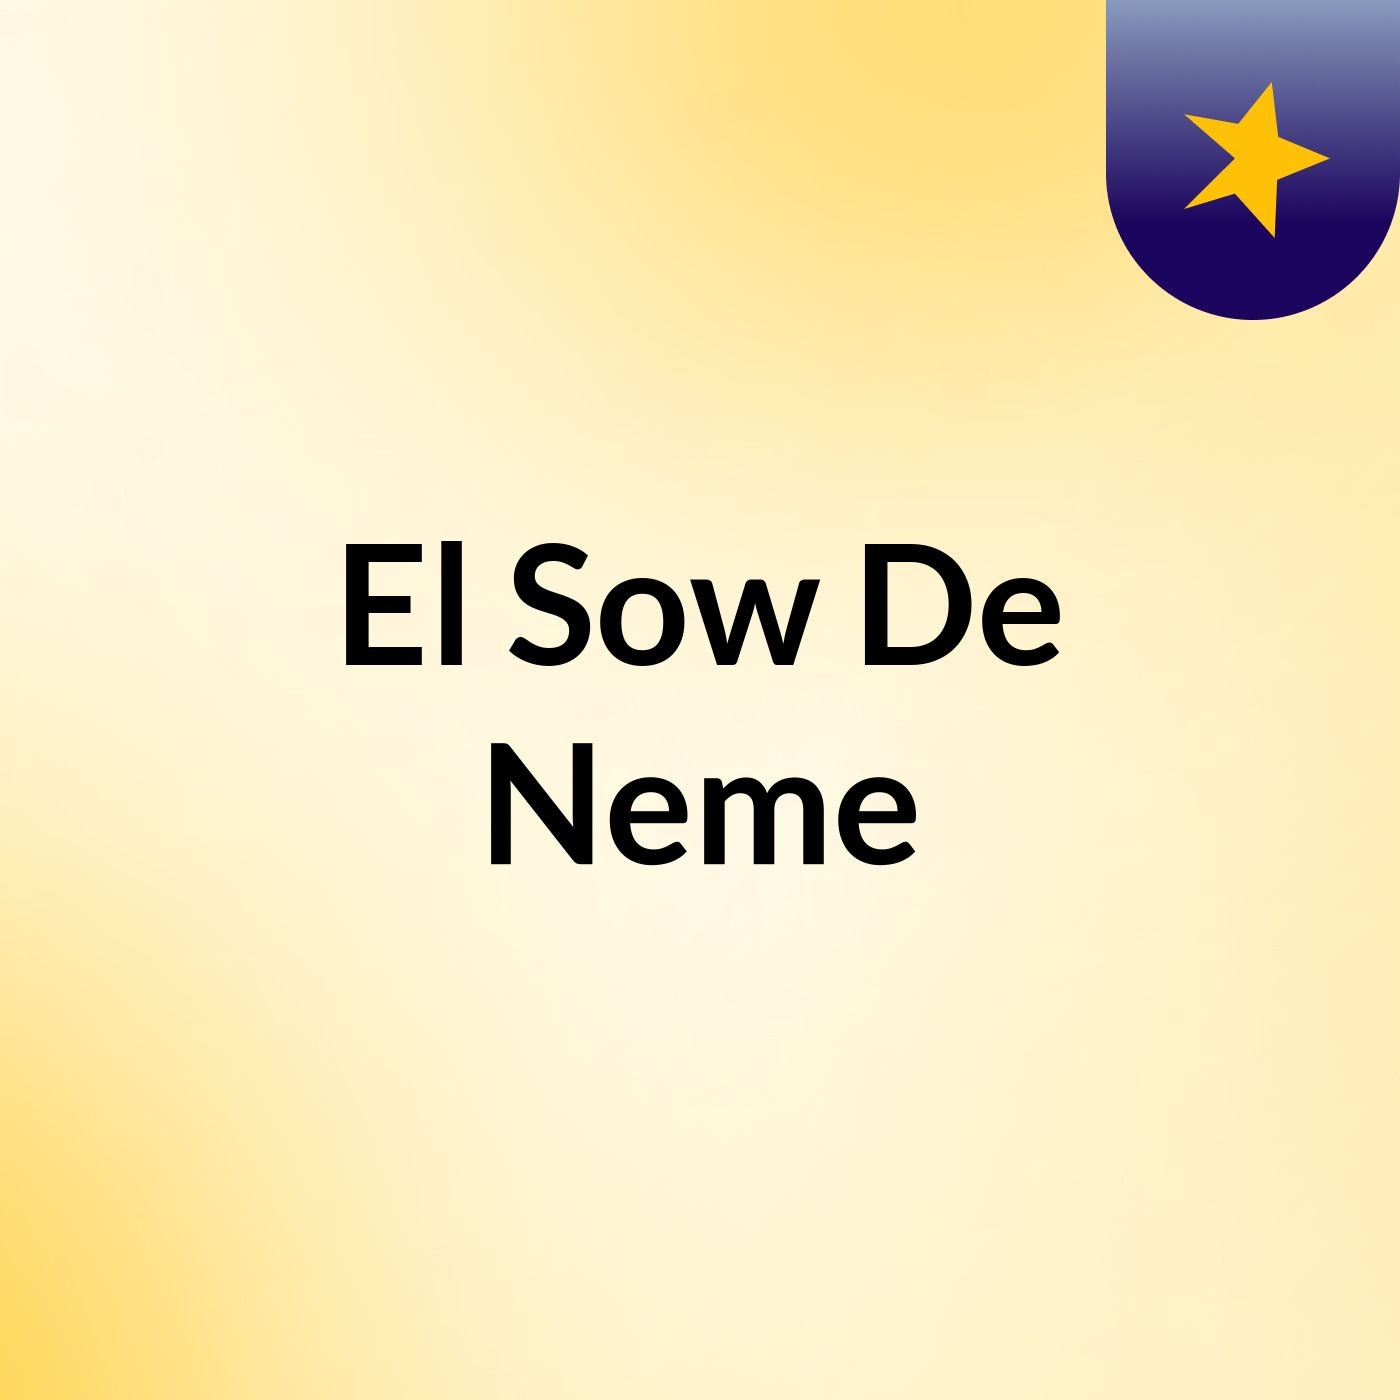 El Sow De Neme